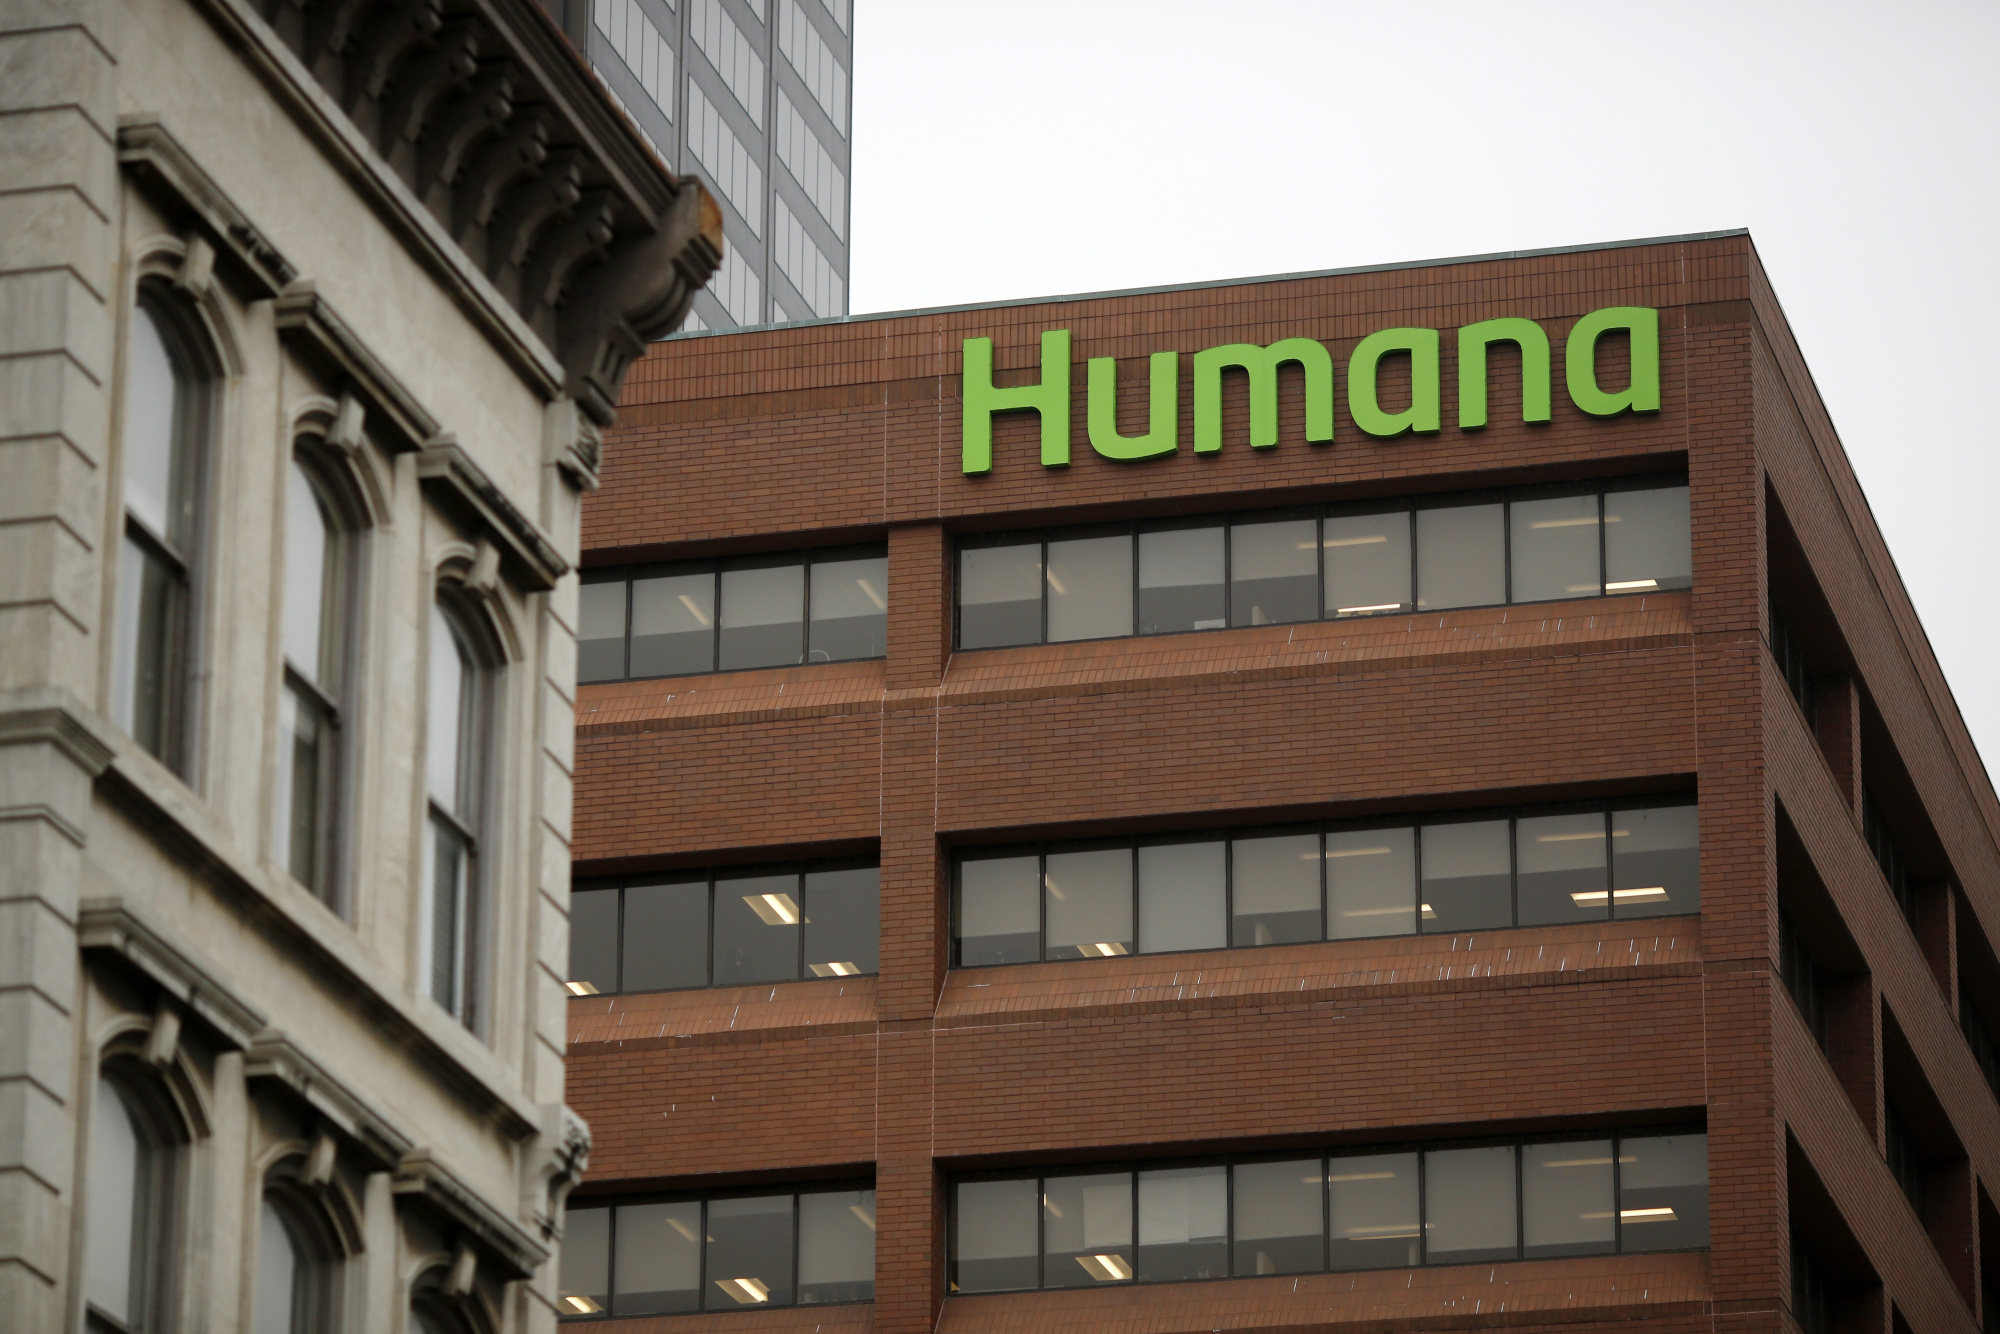 Humana office building in Louisville, Kentucky.